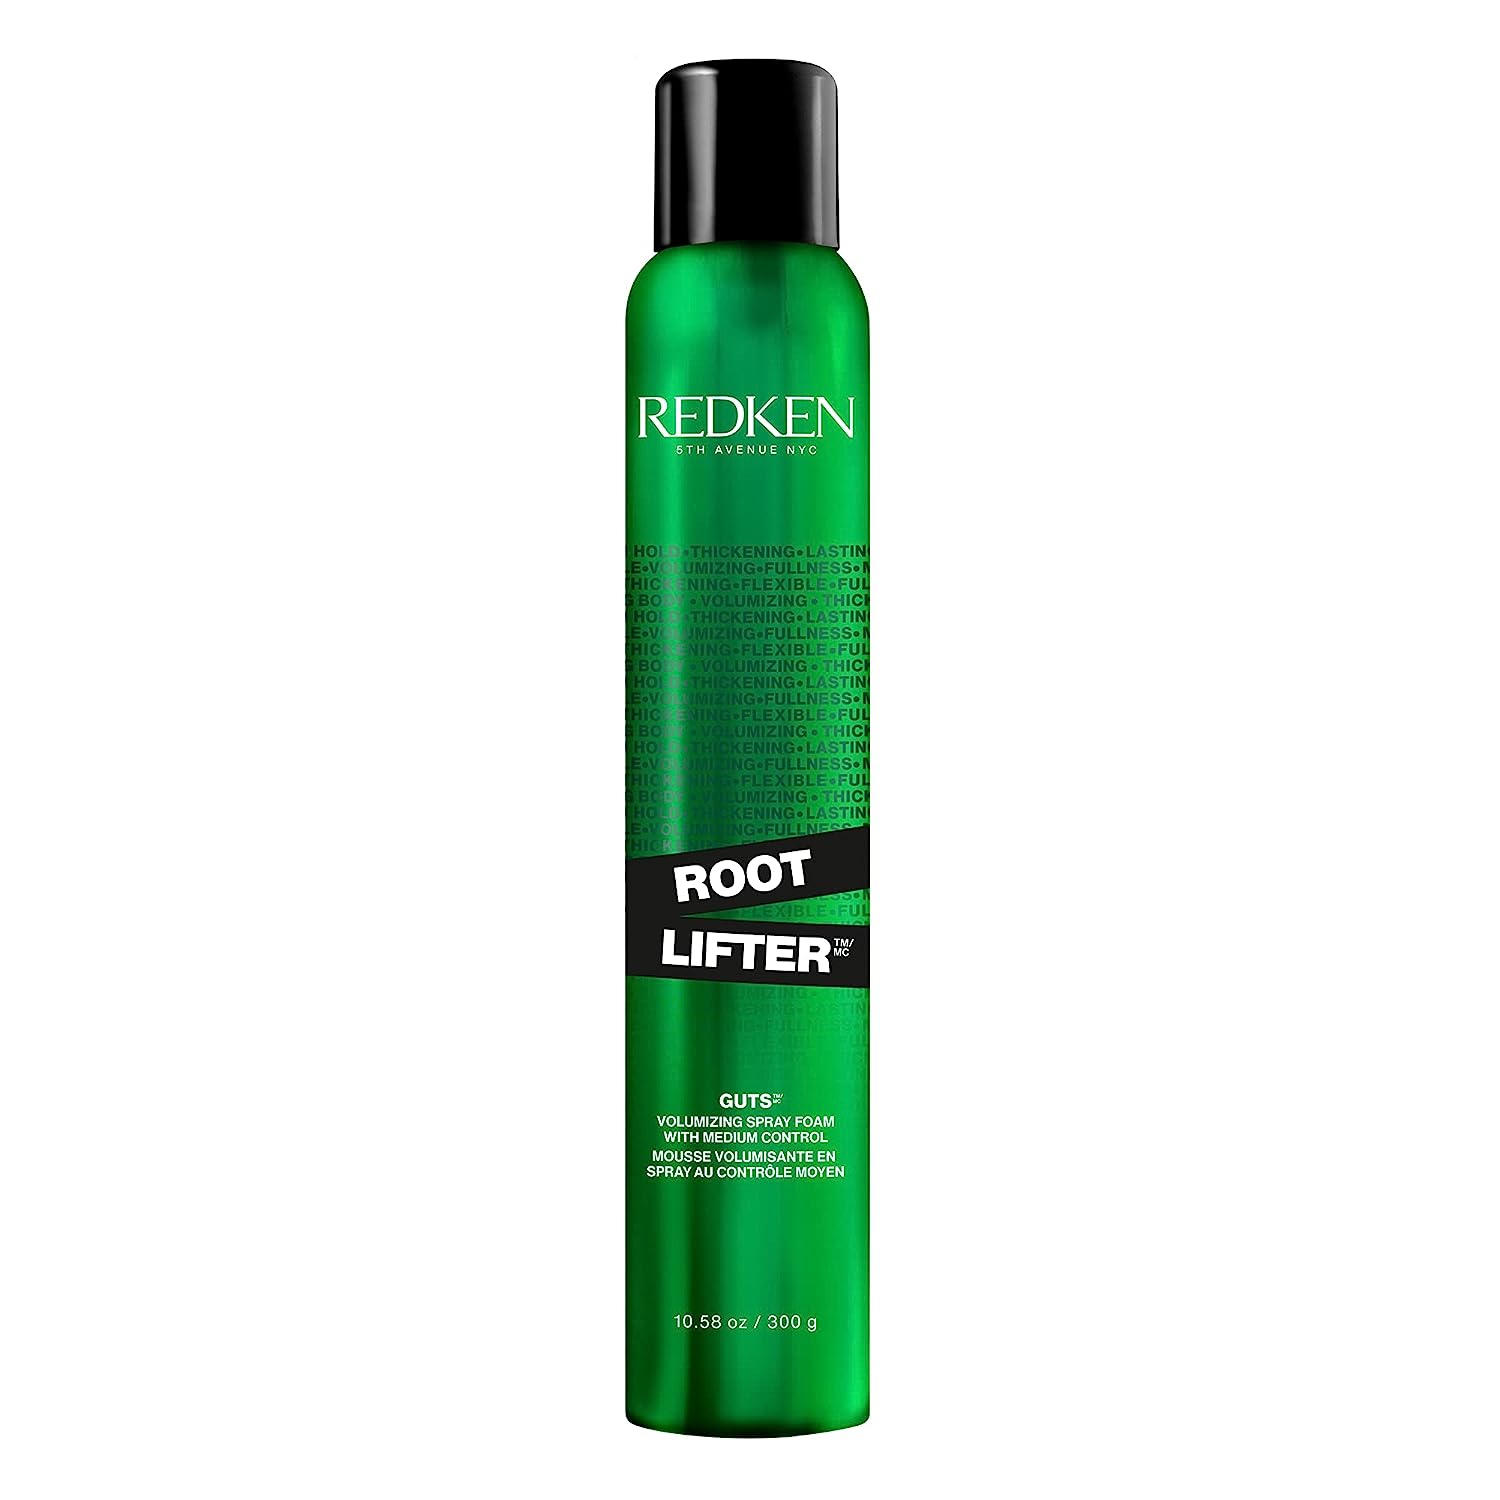 Redken Root Lifter Volumizing Spray Foam | For All [...]